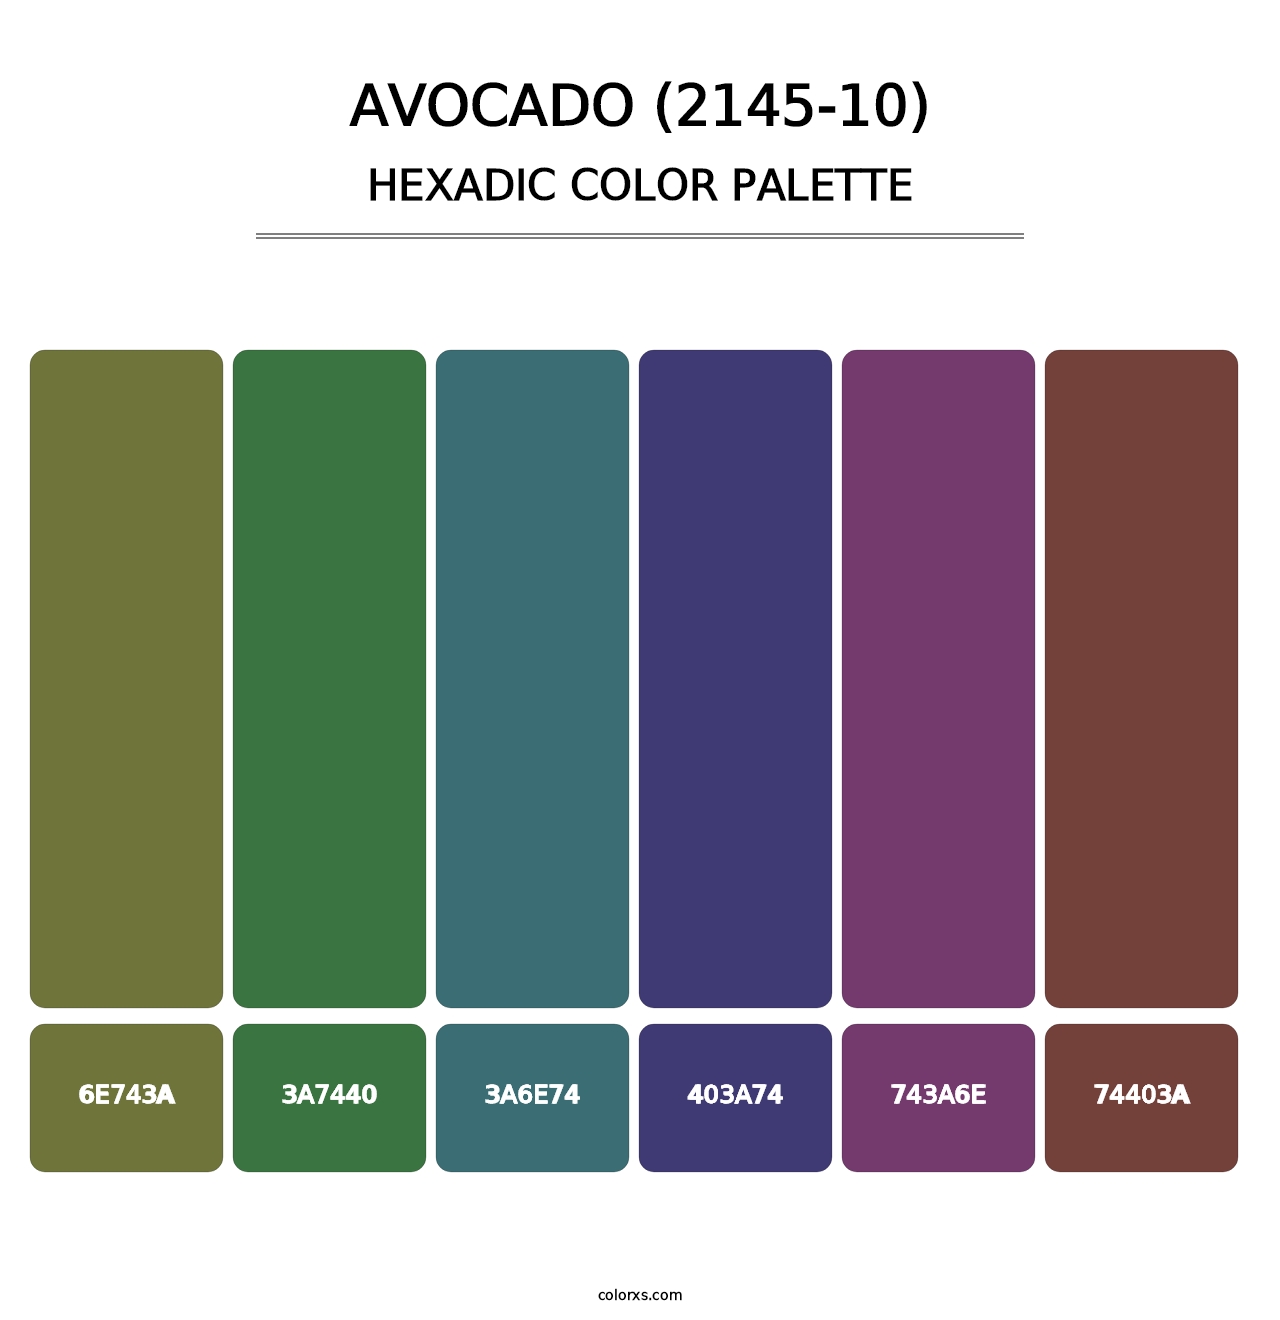 Avocado (2145-10) - Hexadic Color Palette